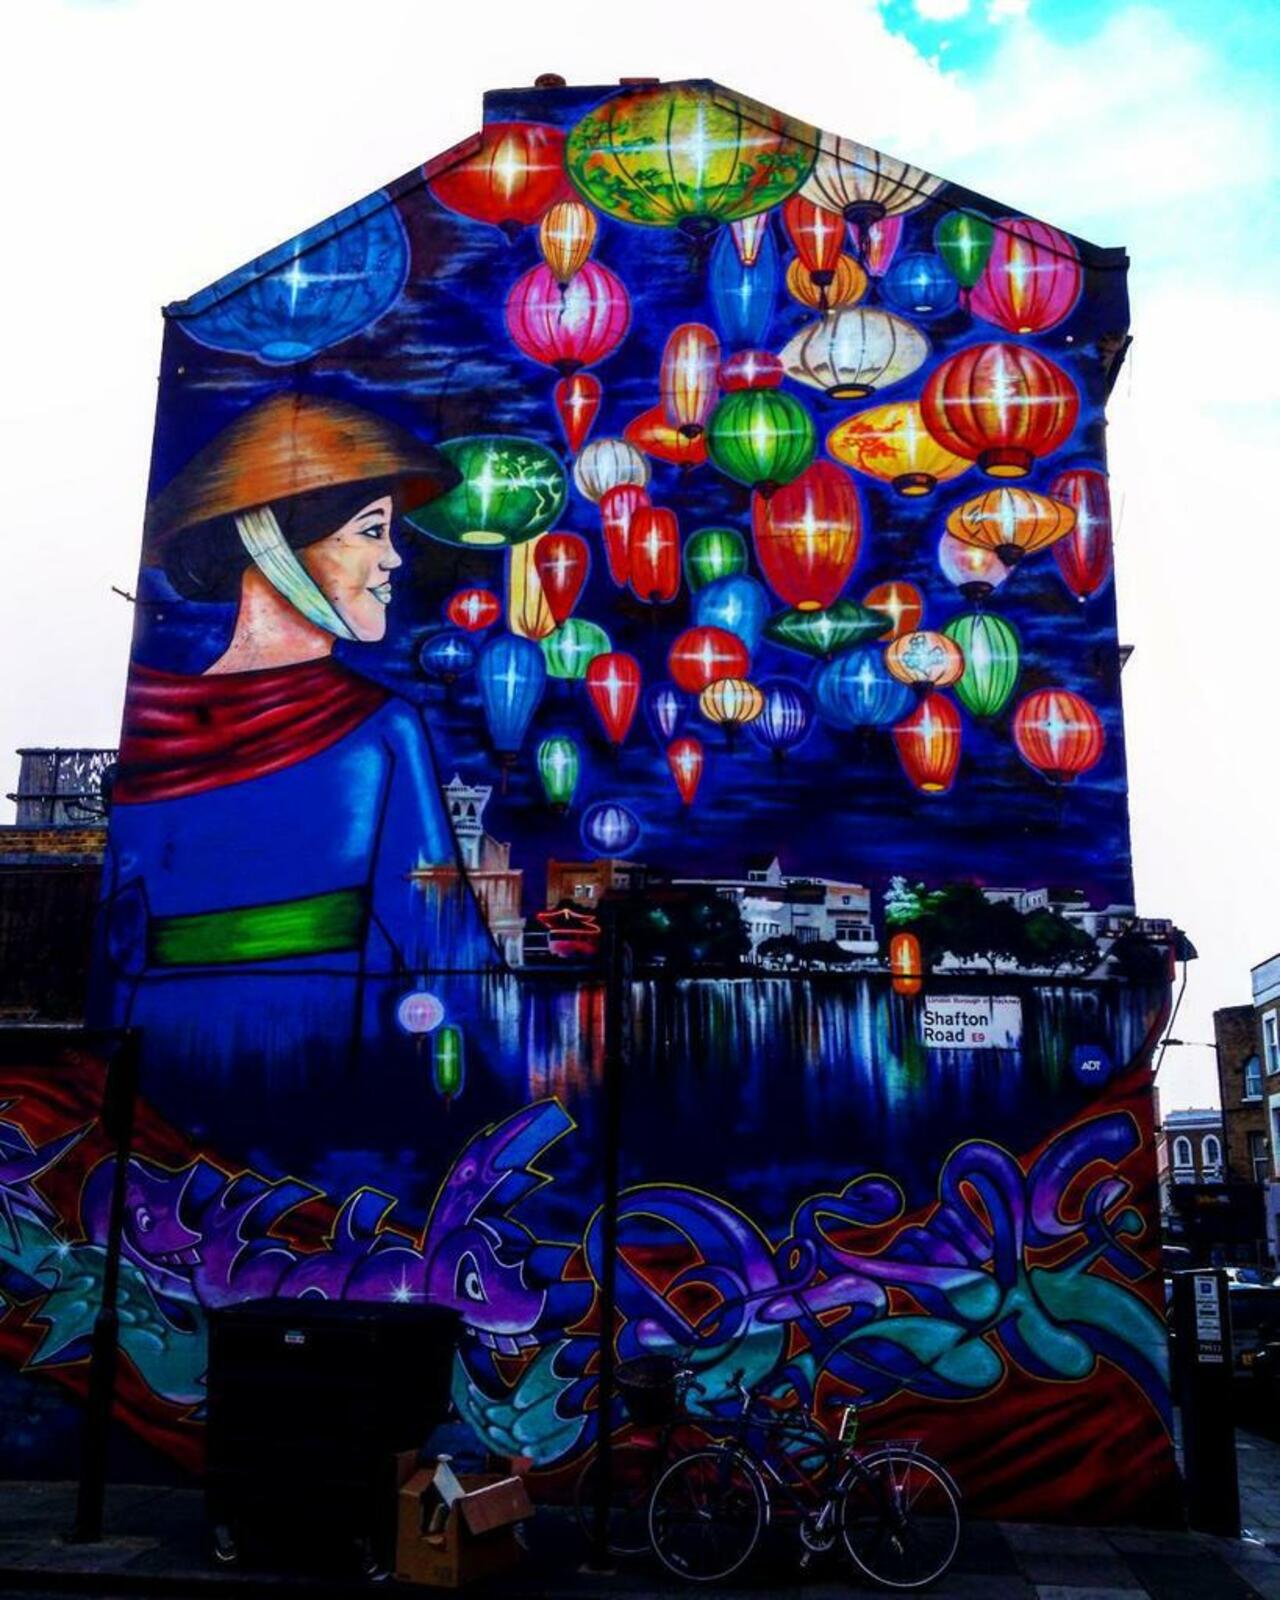 RT @StArtEverywhere: #graffiti #streetart #streetartlondon #hackney #victoriaparkvillage by gargano74 http://t.co/GchtaLlQEj